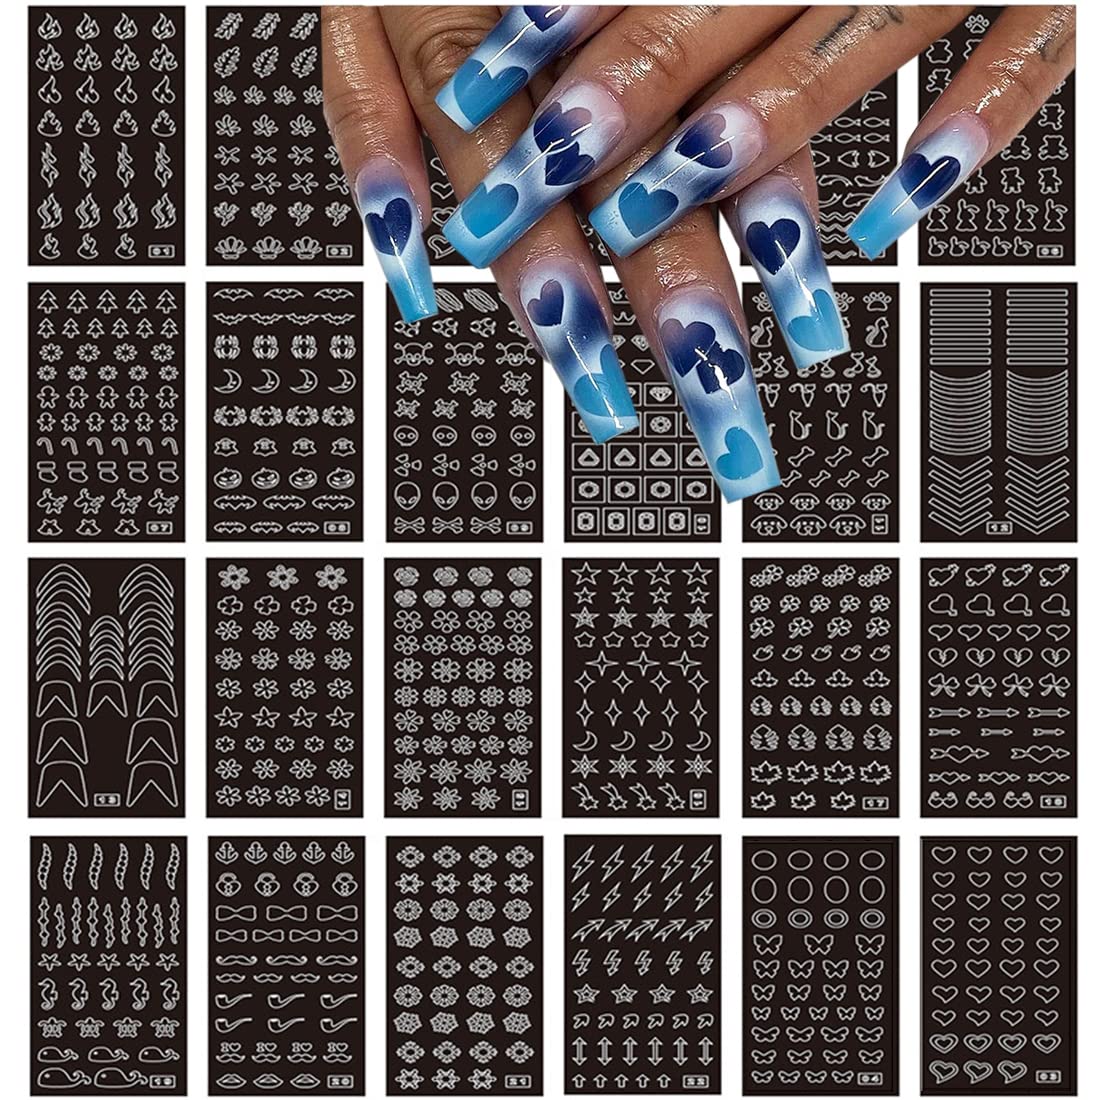 Airbrush Nail Art Design Stencil Strips 6 pc Set Prints and Patterns